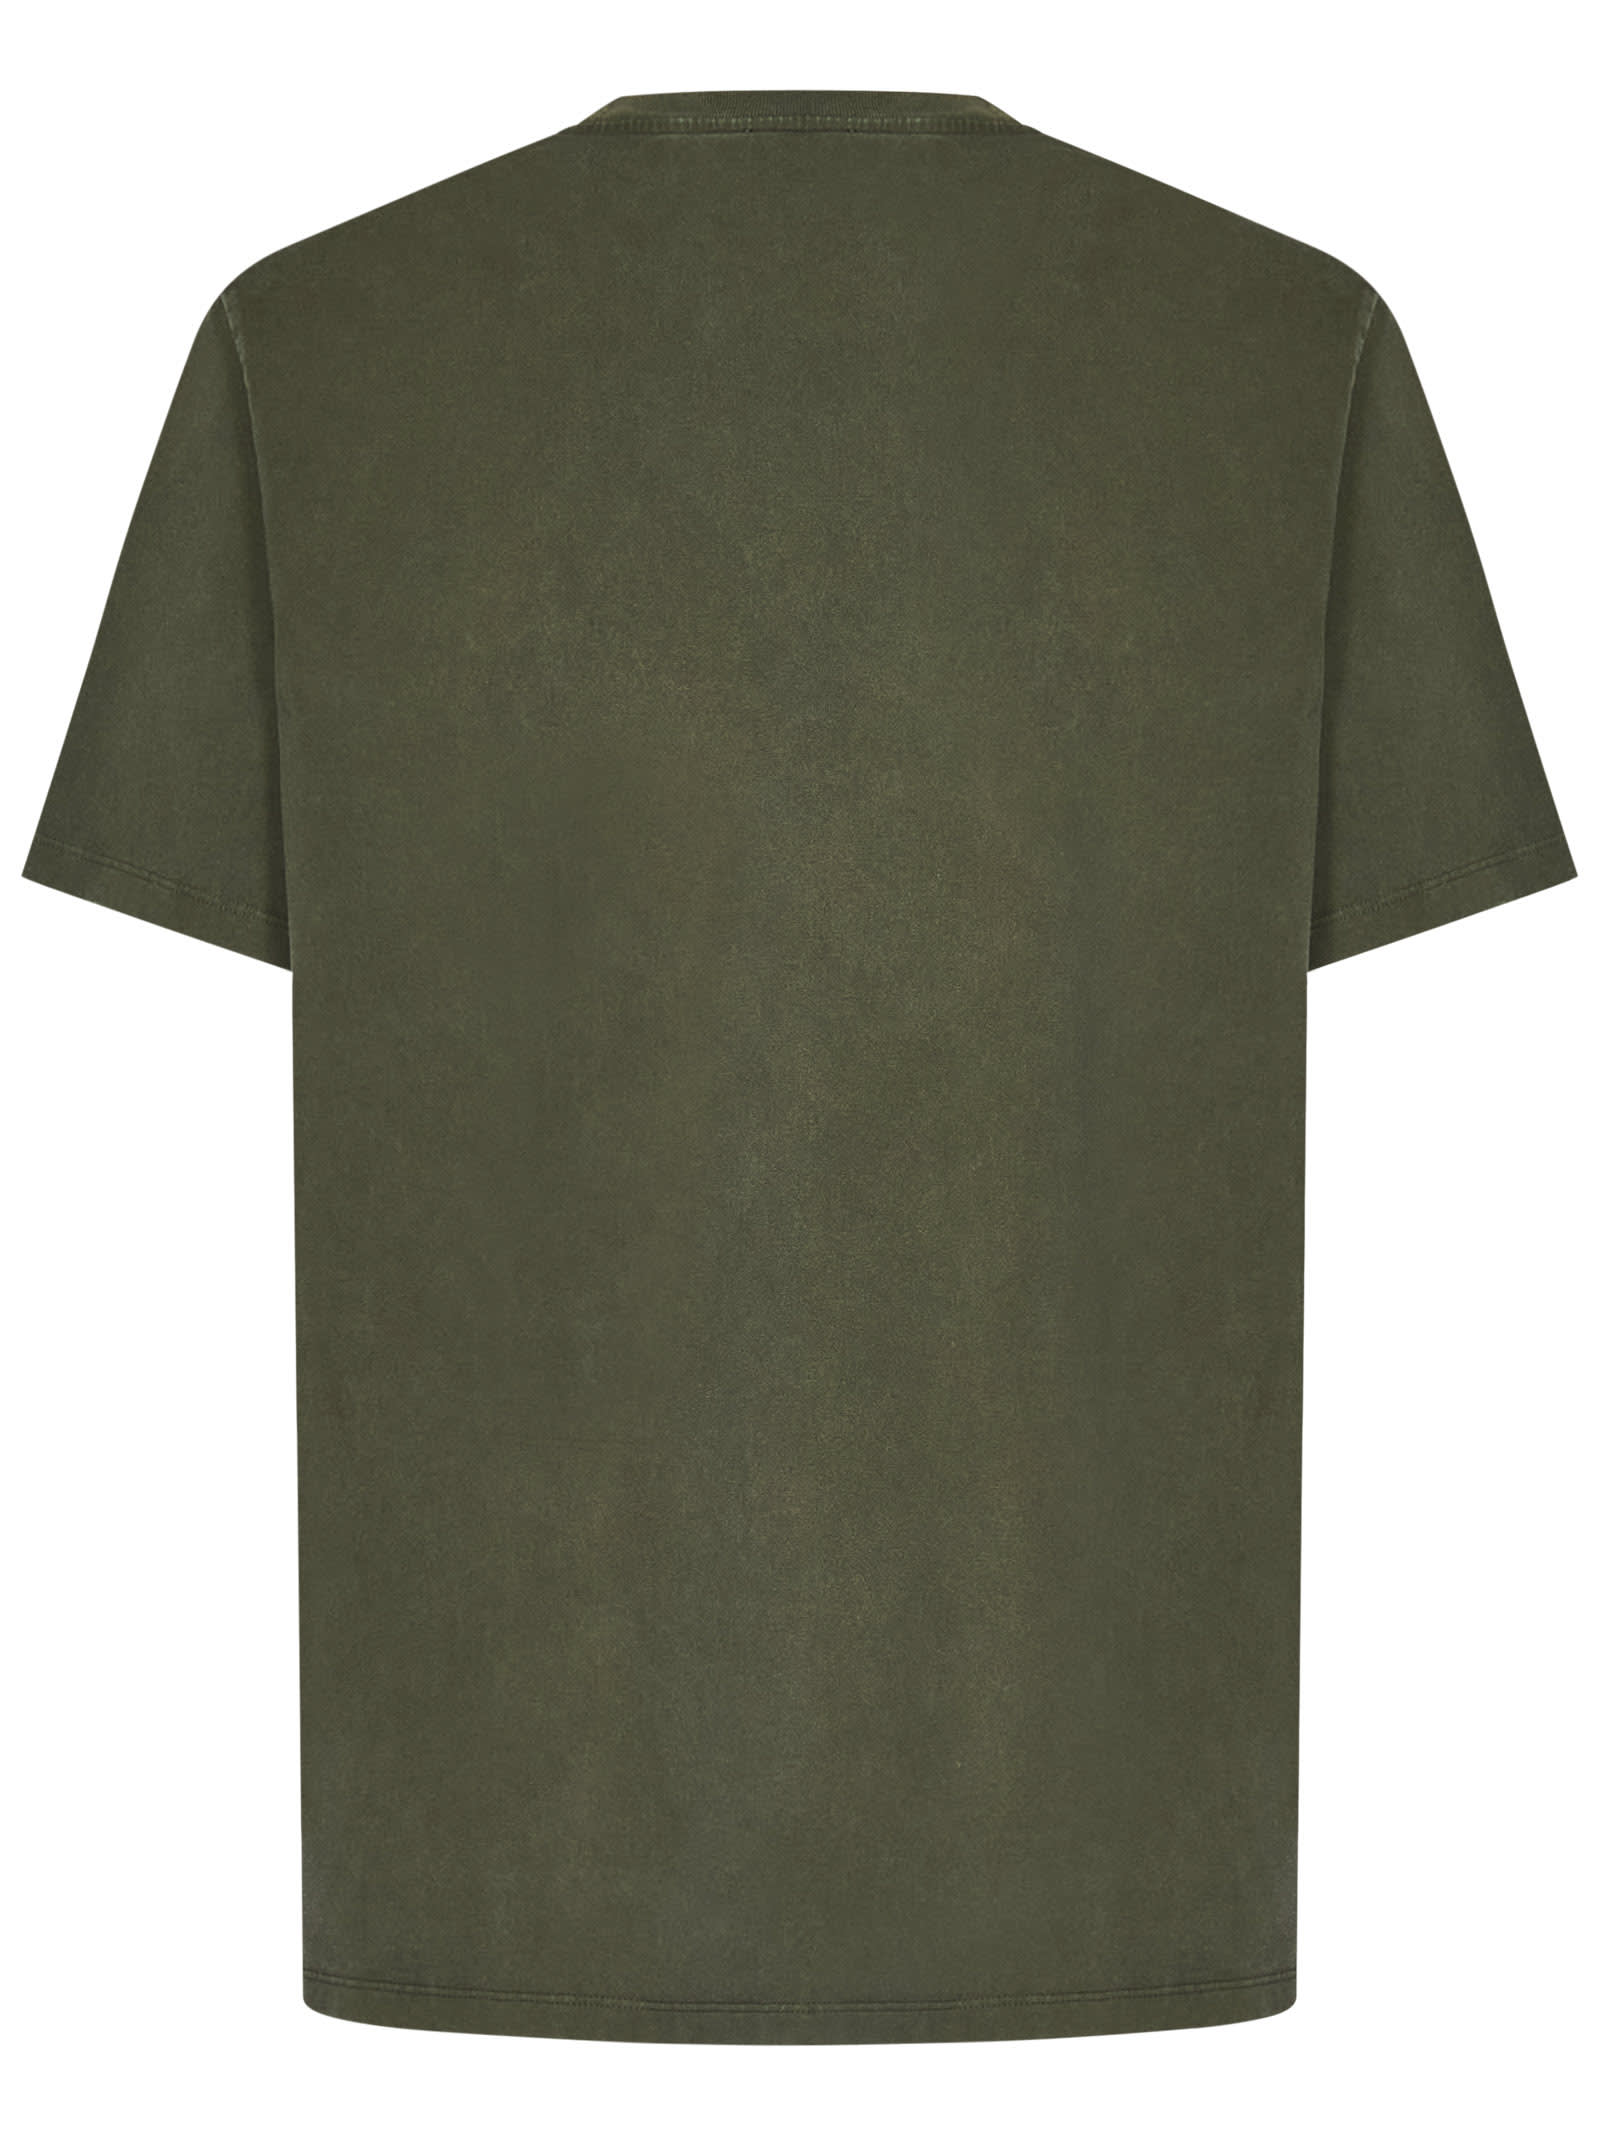 Shop Balmain T-shirt In Army Green